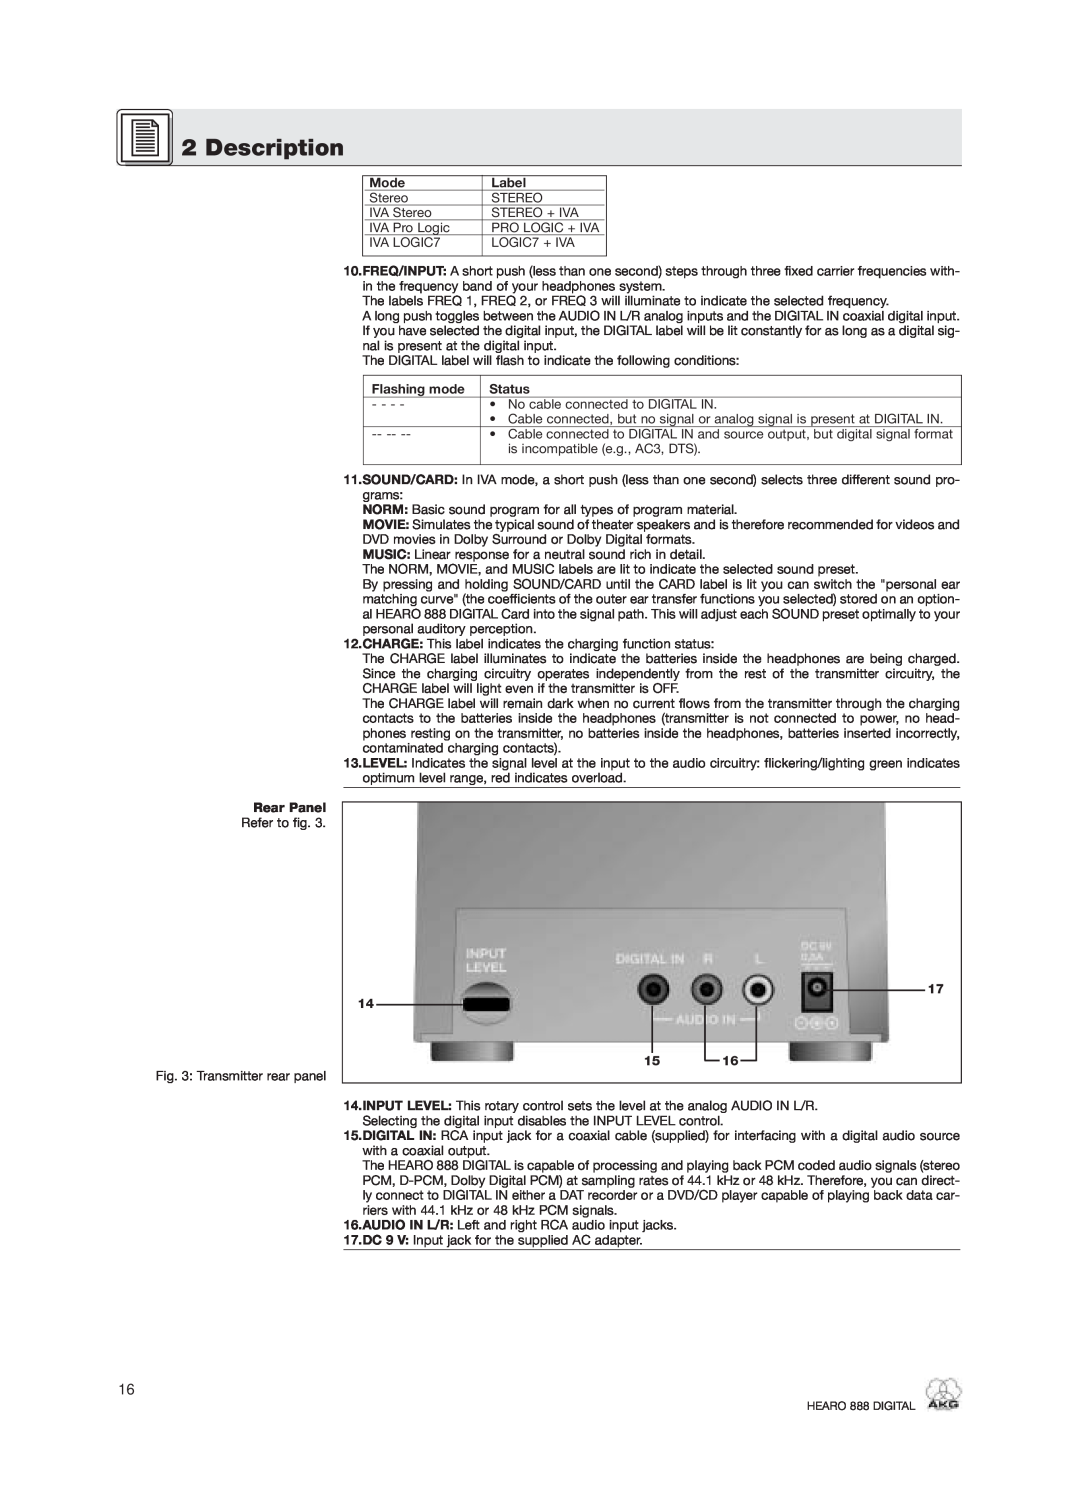 AKG Acoustics HEARO 888 specifications Description, Rear Panel, Mode, Label, Flashing mode, Status, 17 14 15 